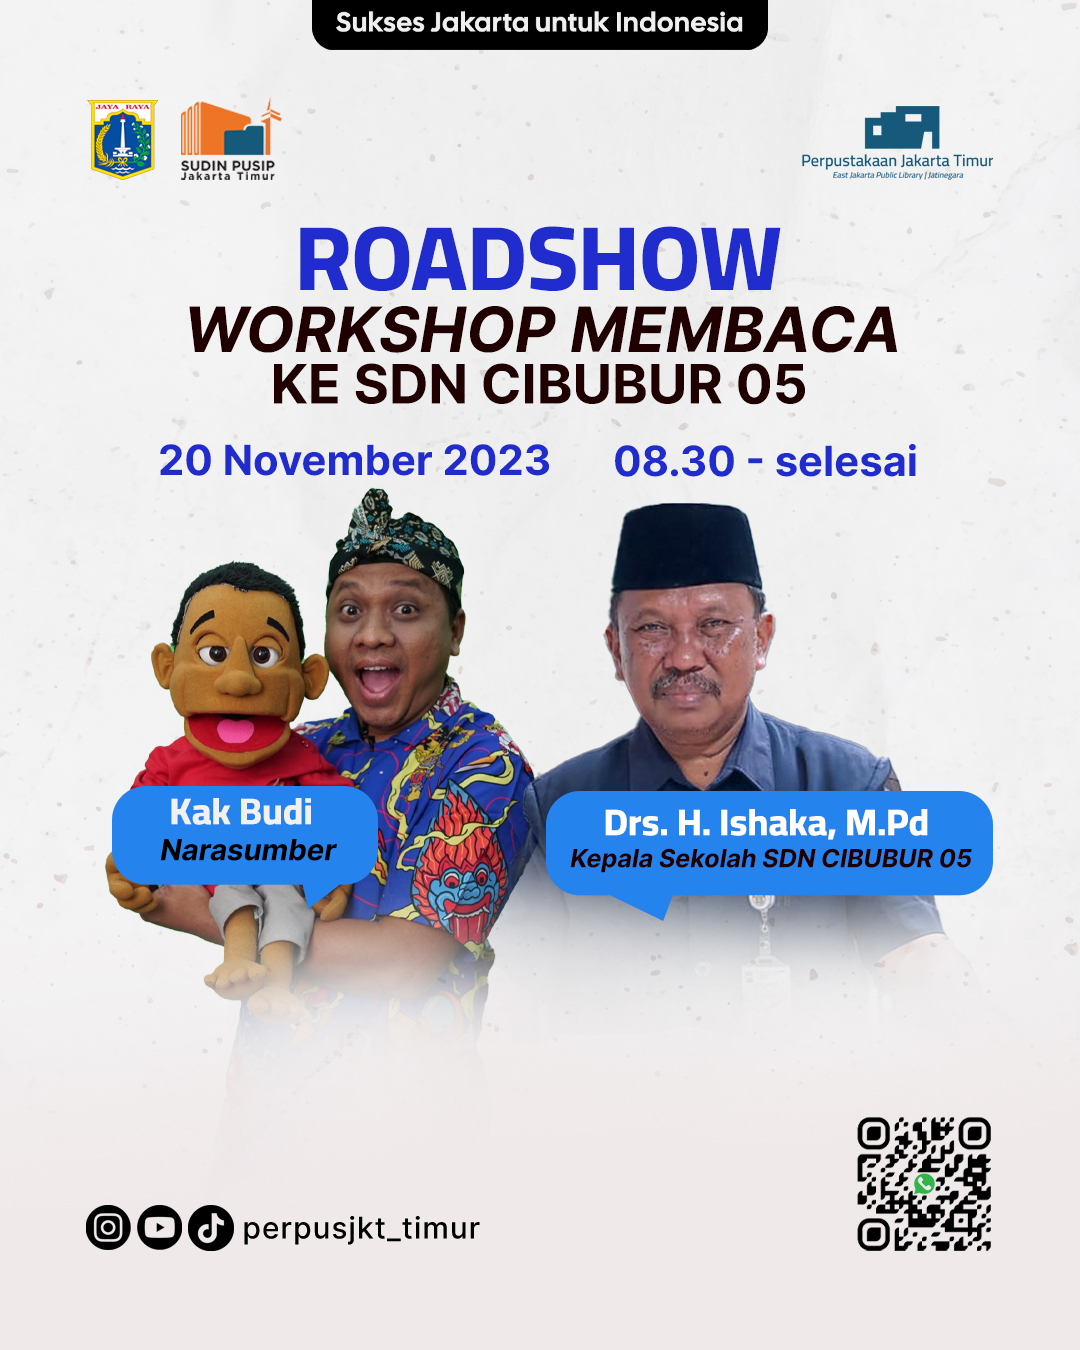 Roadshow Workshop Membaca Di SDN Cibubur 05